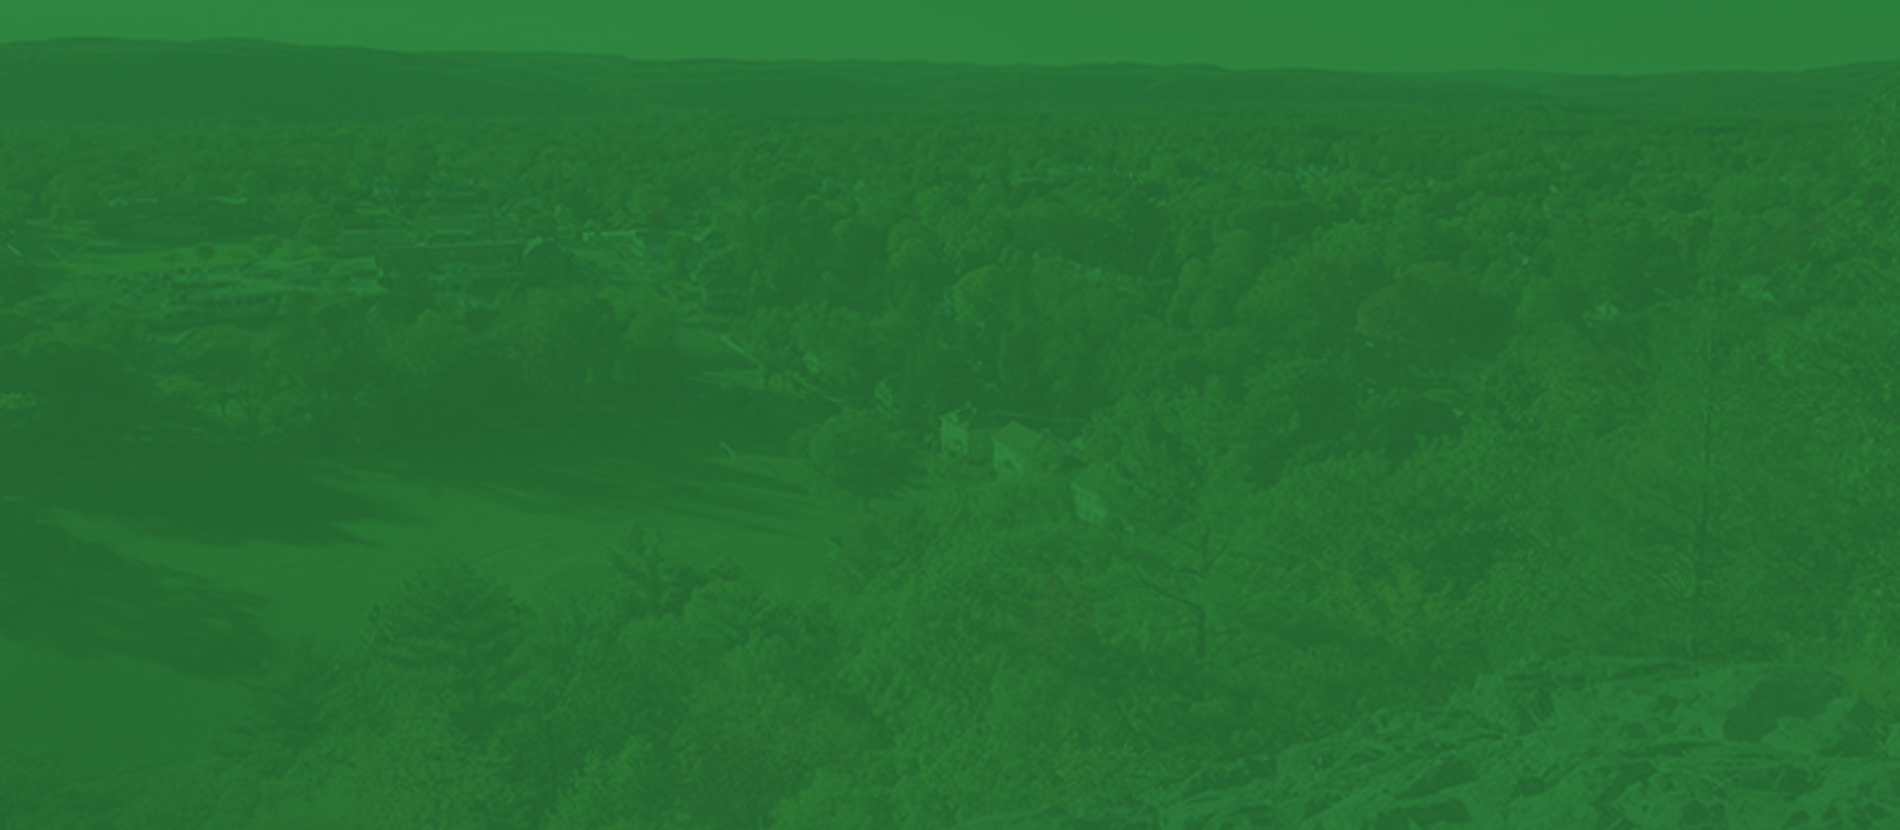 green background community image